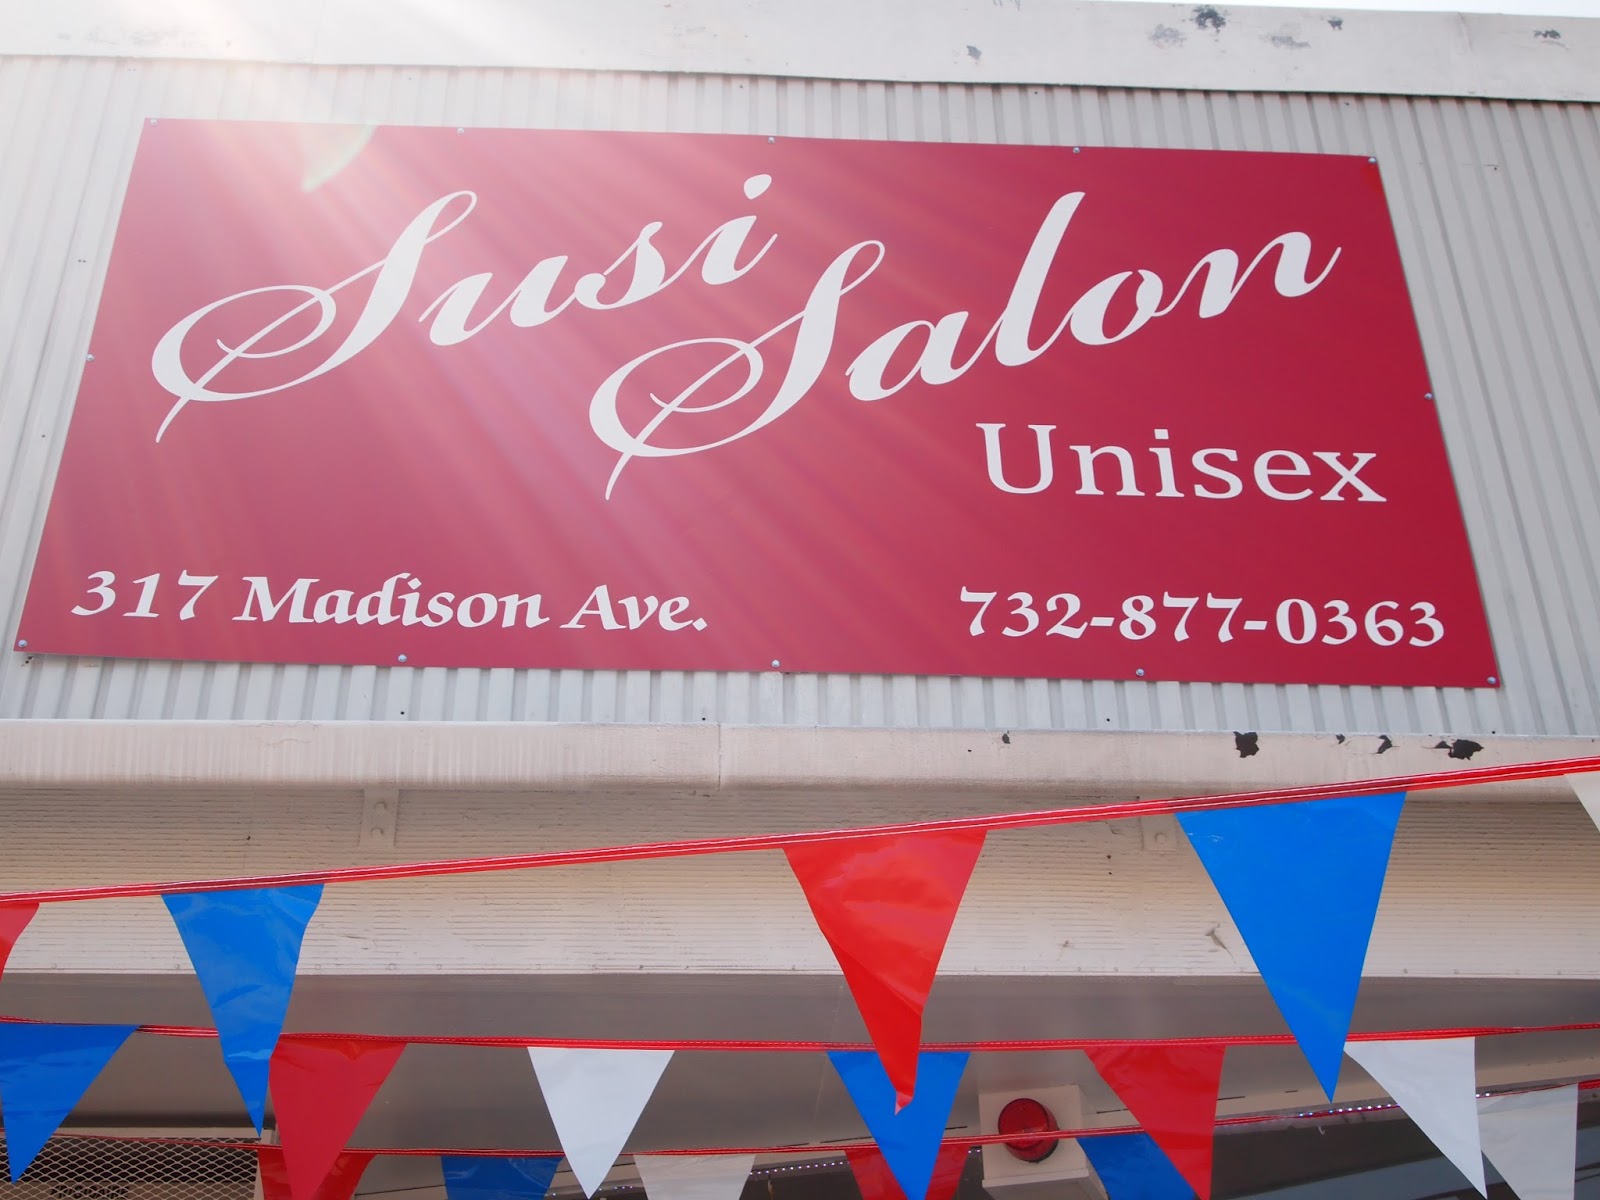 Photo of Susi Salon in Perth Amboy City, New Jersey, United States - 2 Picture of Point of interest, Establishment, Beauty salon